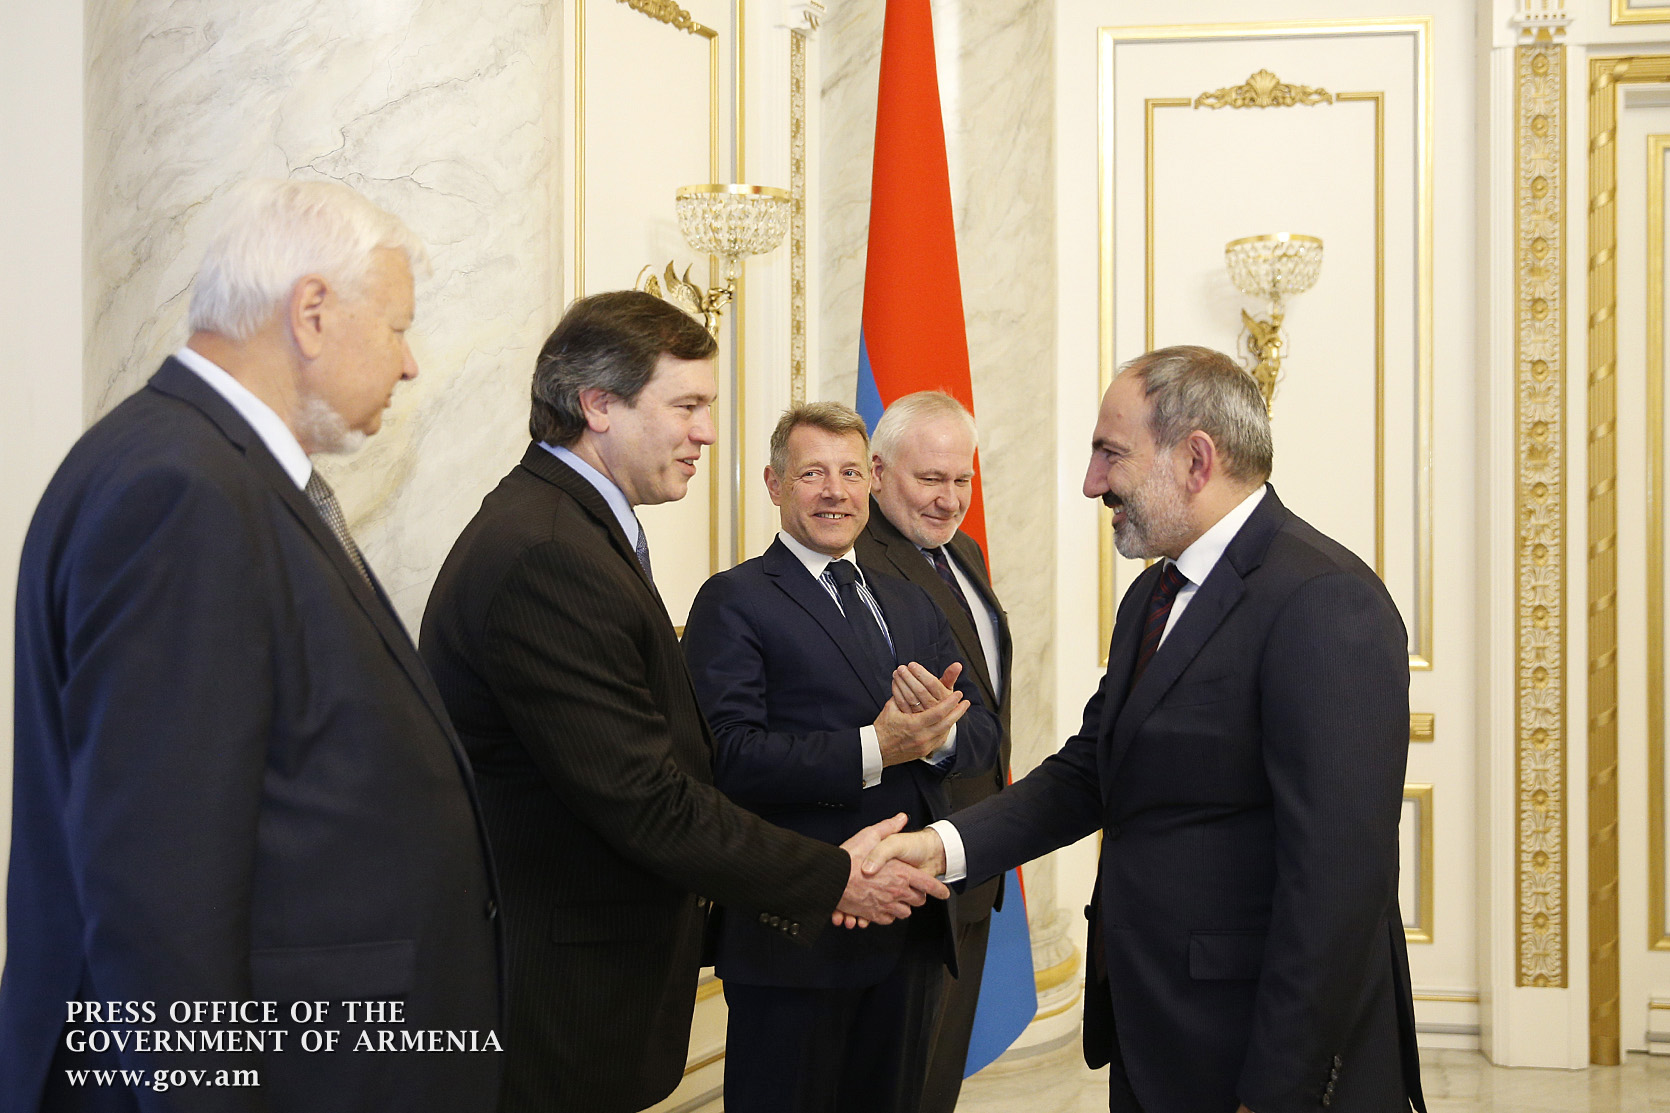 Никол Пашинян сопредседателям МГ ОБСЕ представил подробности встречи с Алиевым в Давосе